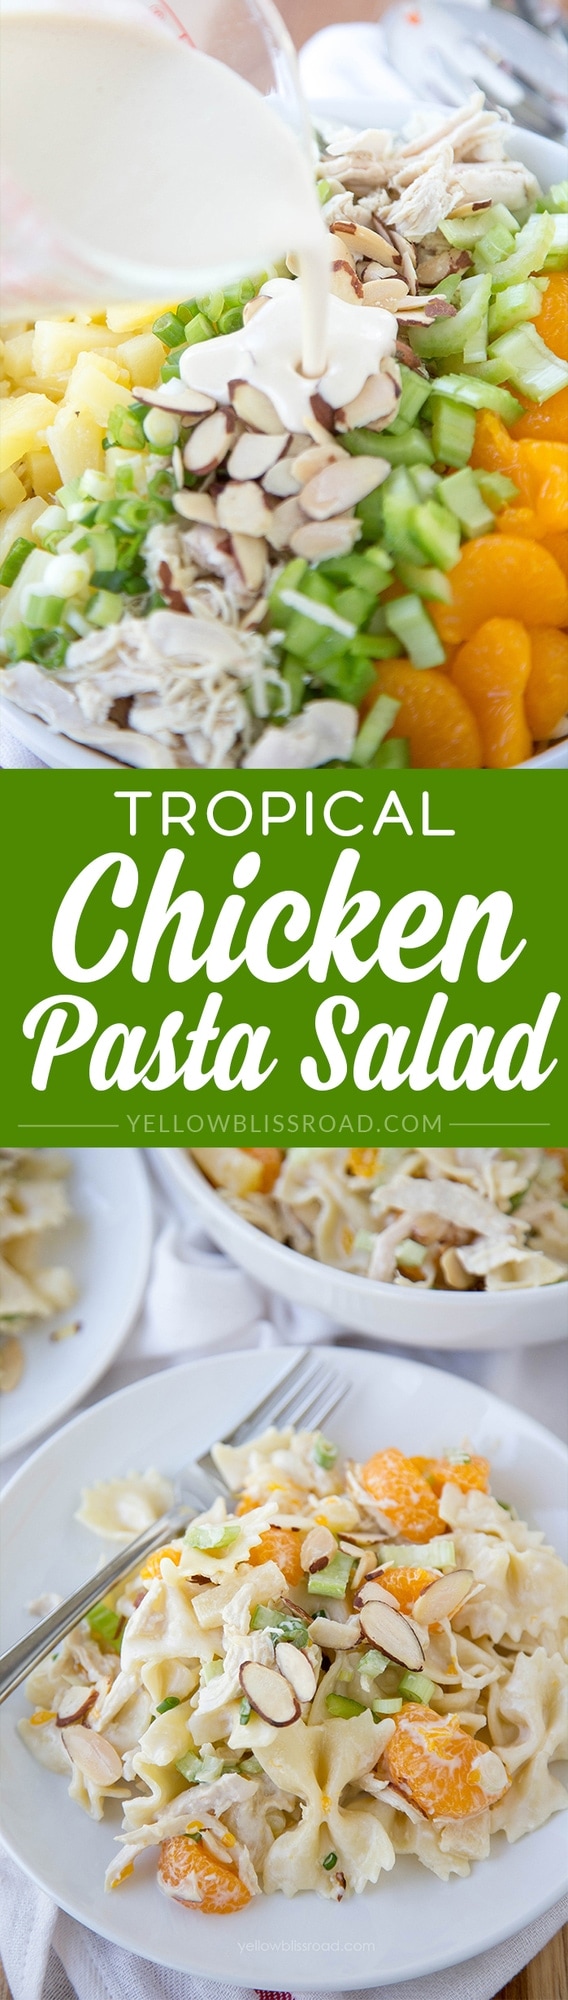 Tropical Chicken Pasta Salad with a creamy Greek Yogurt vinaigrette